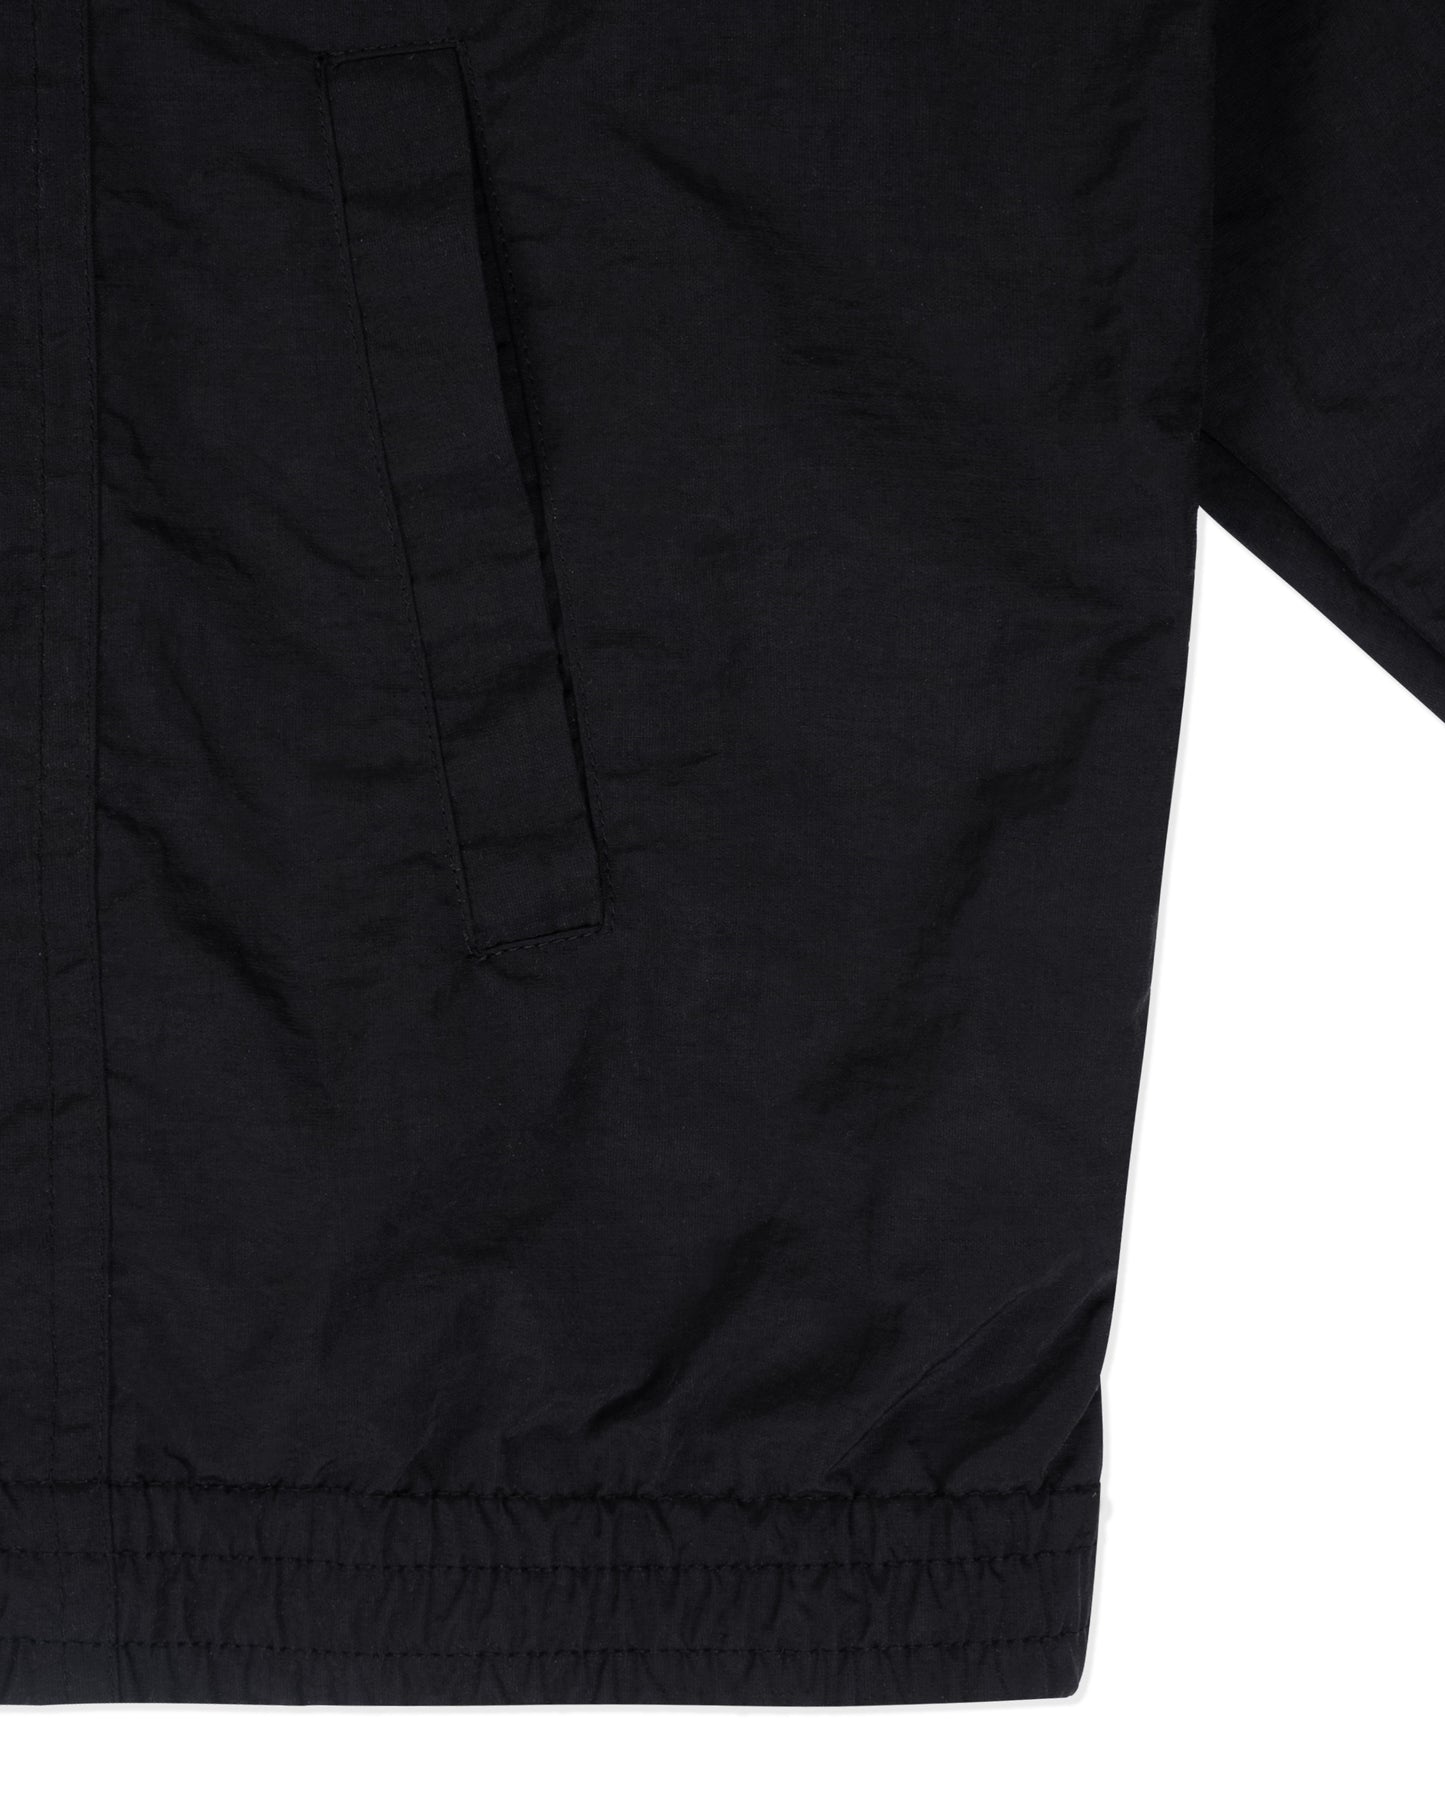 Levents® Classic Wrinkle Nylon Line Hood Jacket/ Black